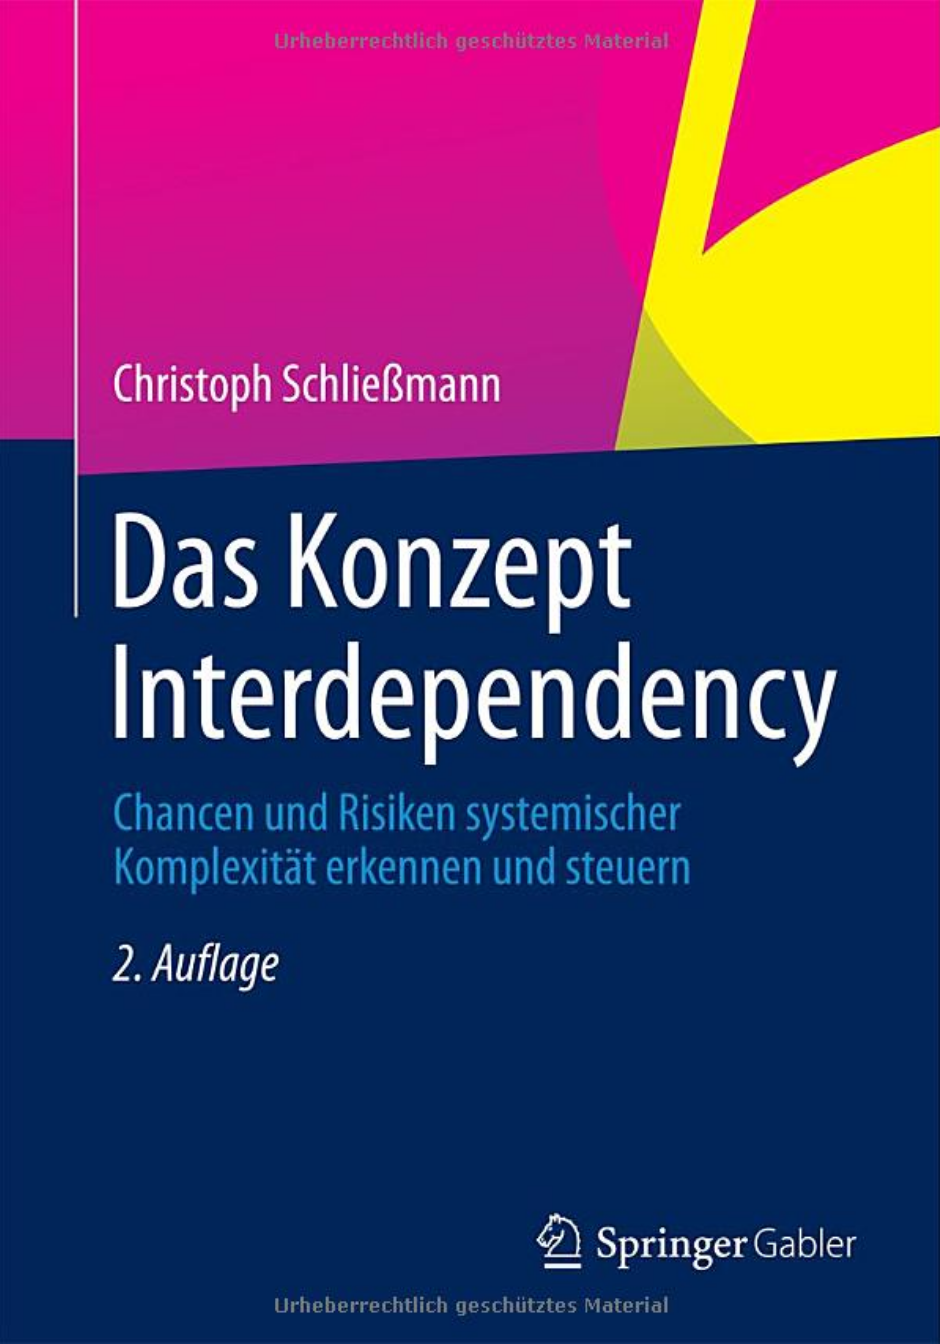 2020, christoph ph. schließmann, schließmann, interdependency, corona, covid-19